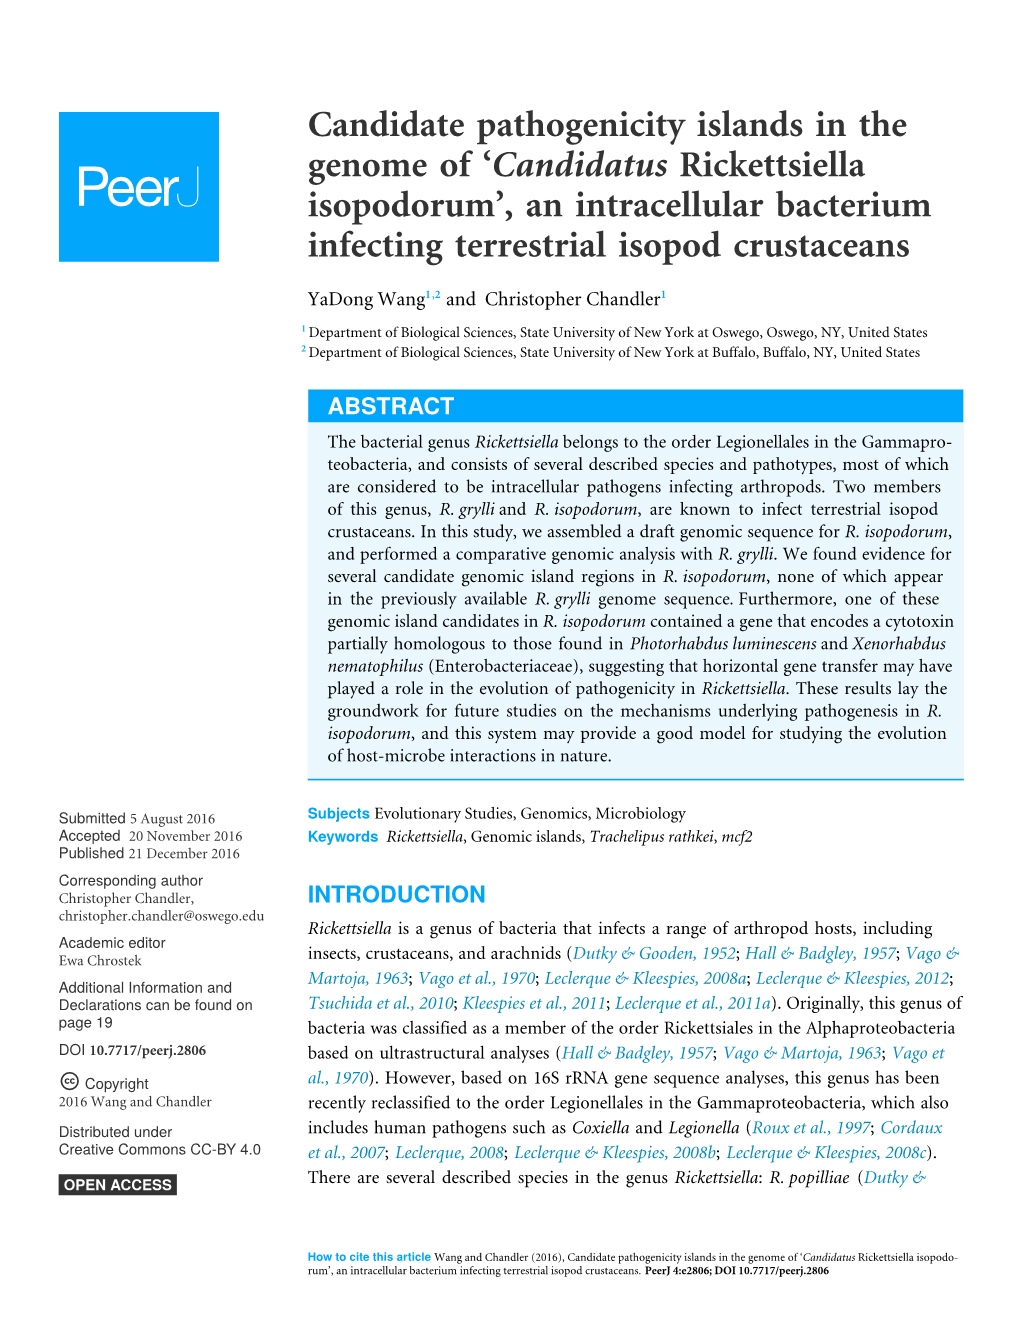 Candidatus Rickettsiella Isopodorum’, an Intracellular Bacterium Infecting Terrestrial Isopod Crustaceans